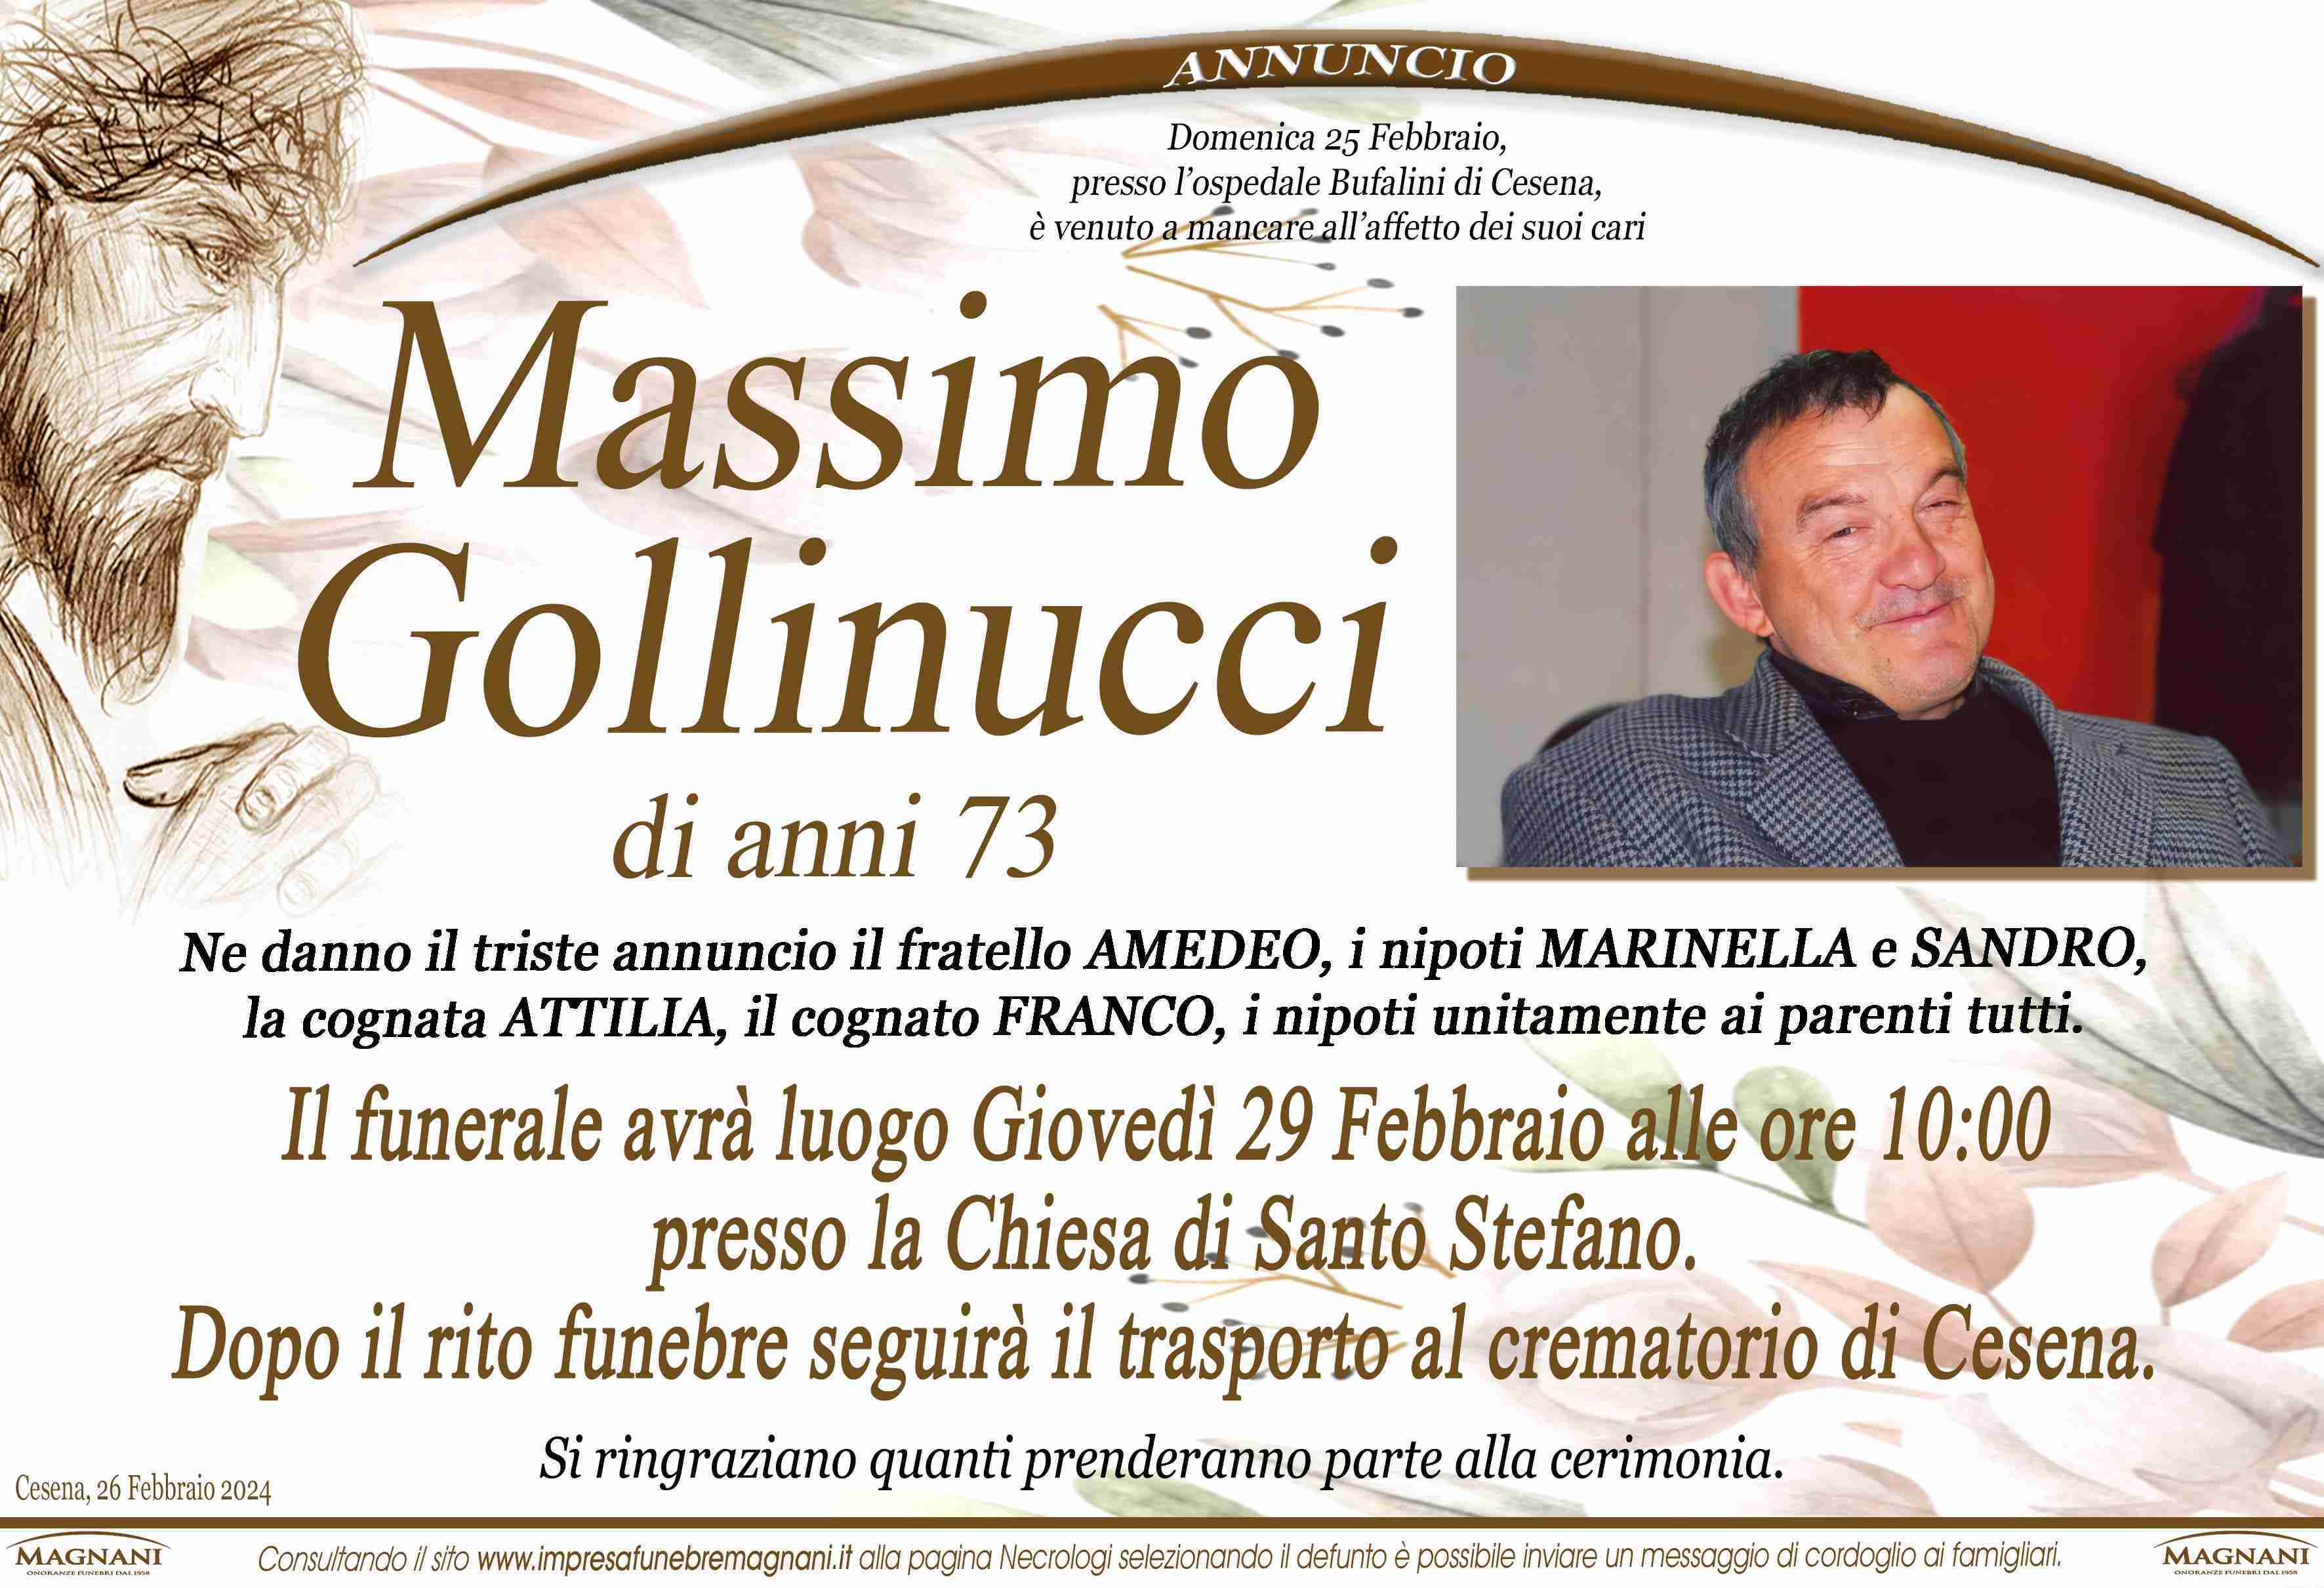 Massimo Gollinucci